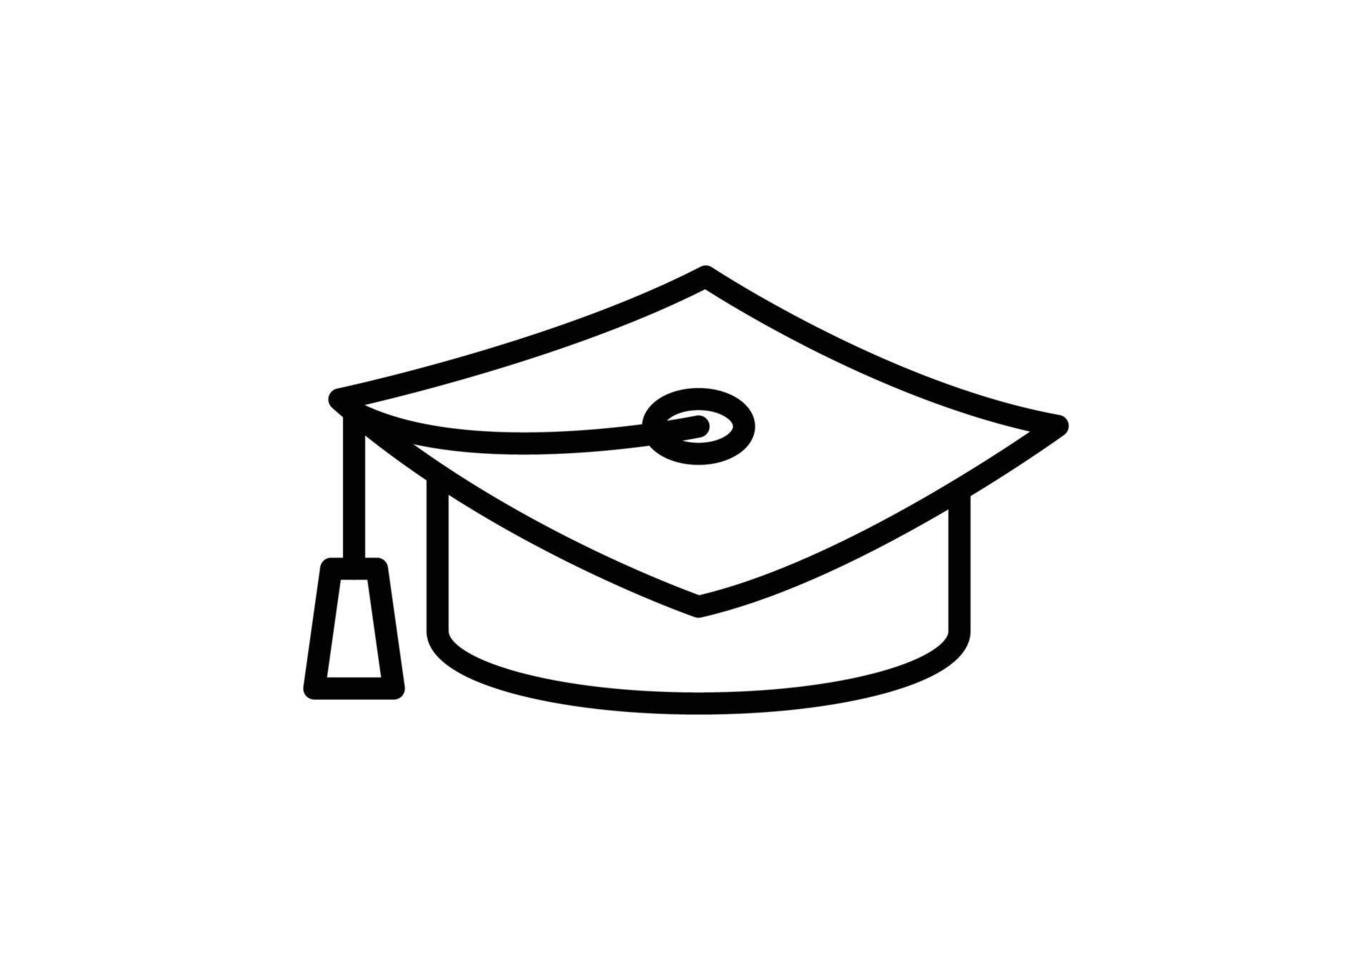 Graduation cap icon logo design template vector isolated illustration